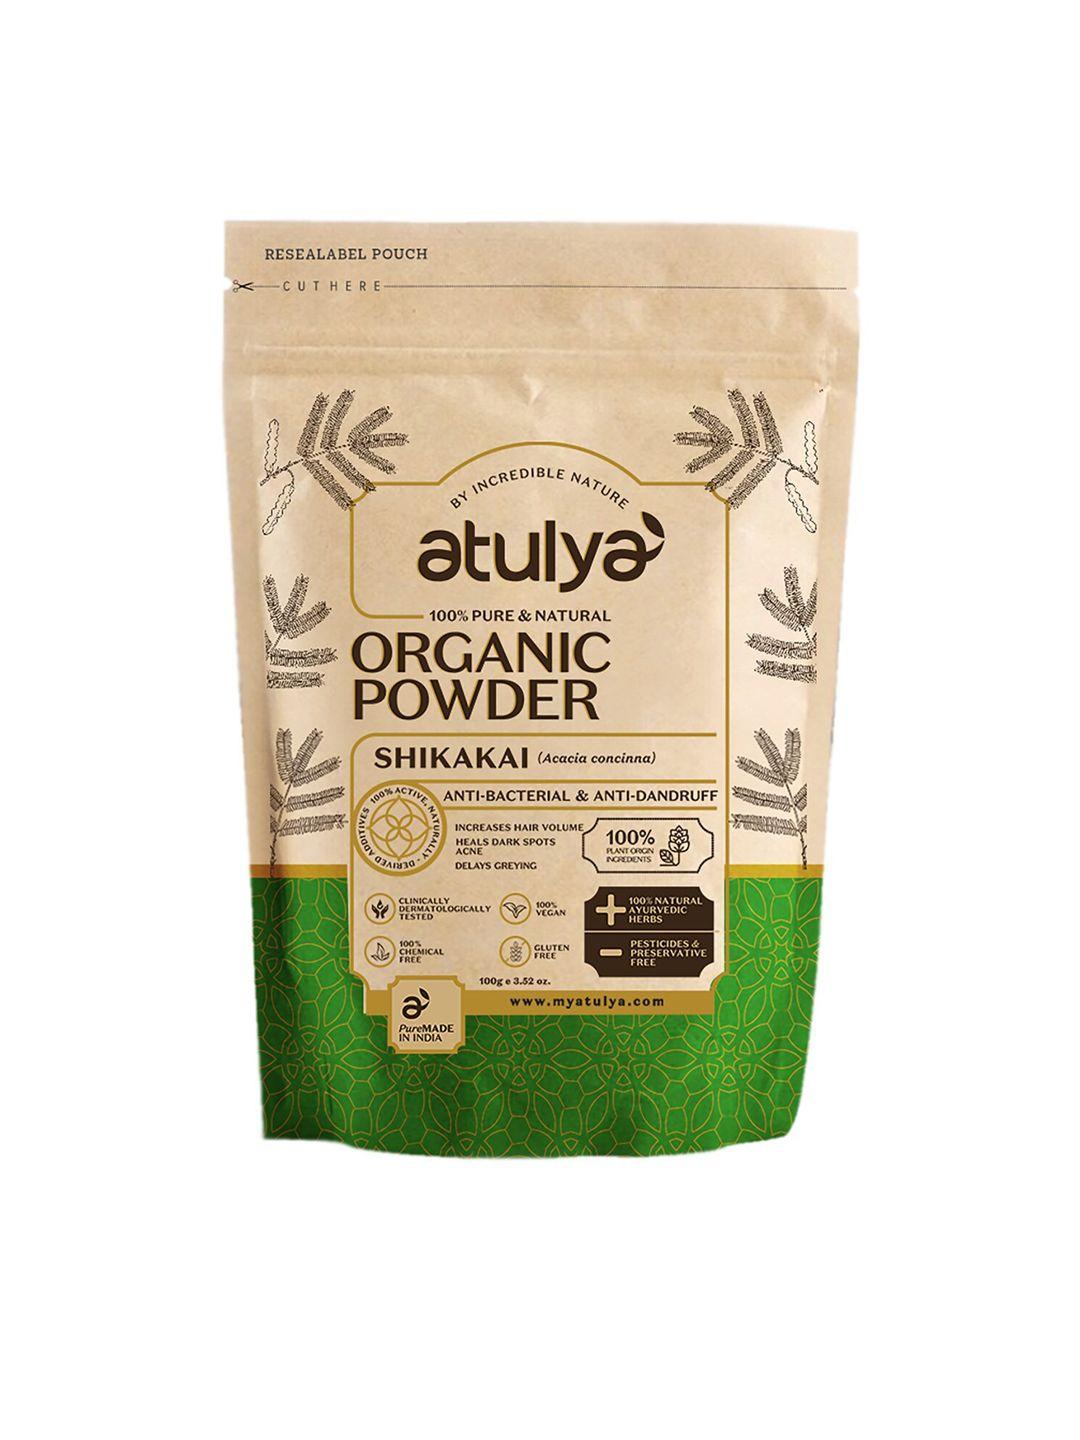 atulya 100% pure & natural shikakai organic hair powder for anti-dandruff - 100 g